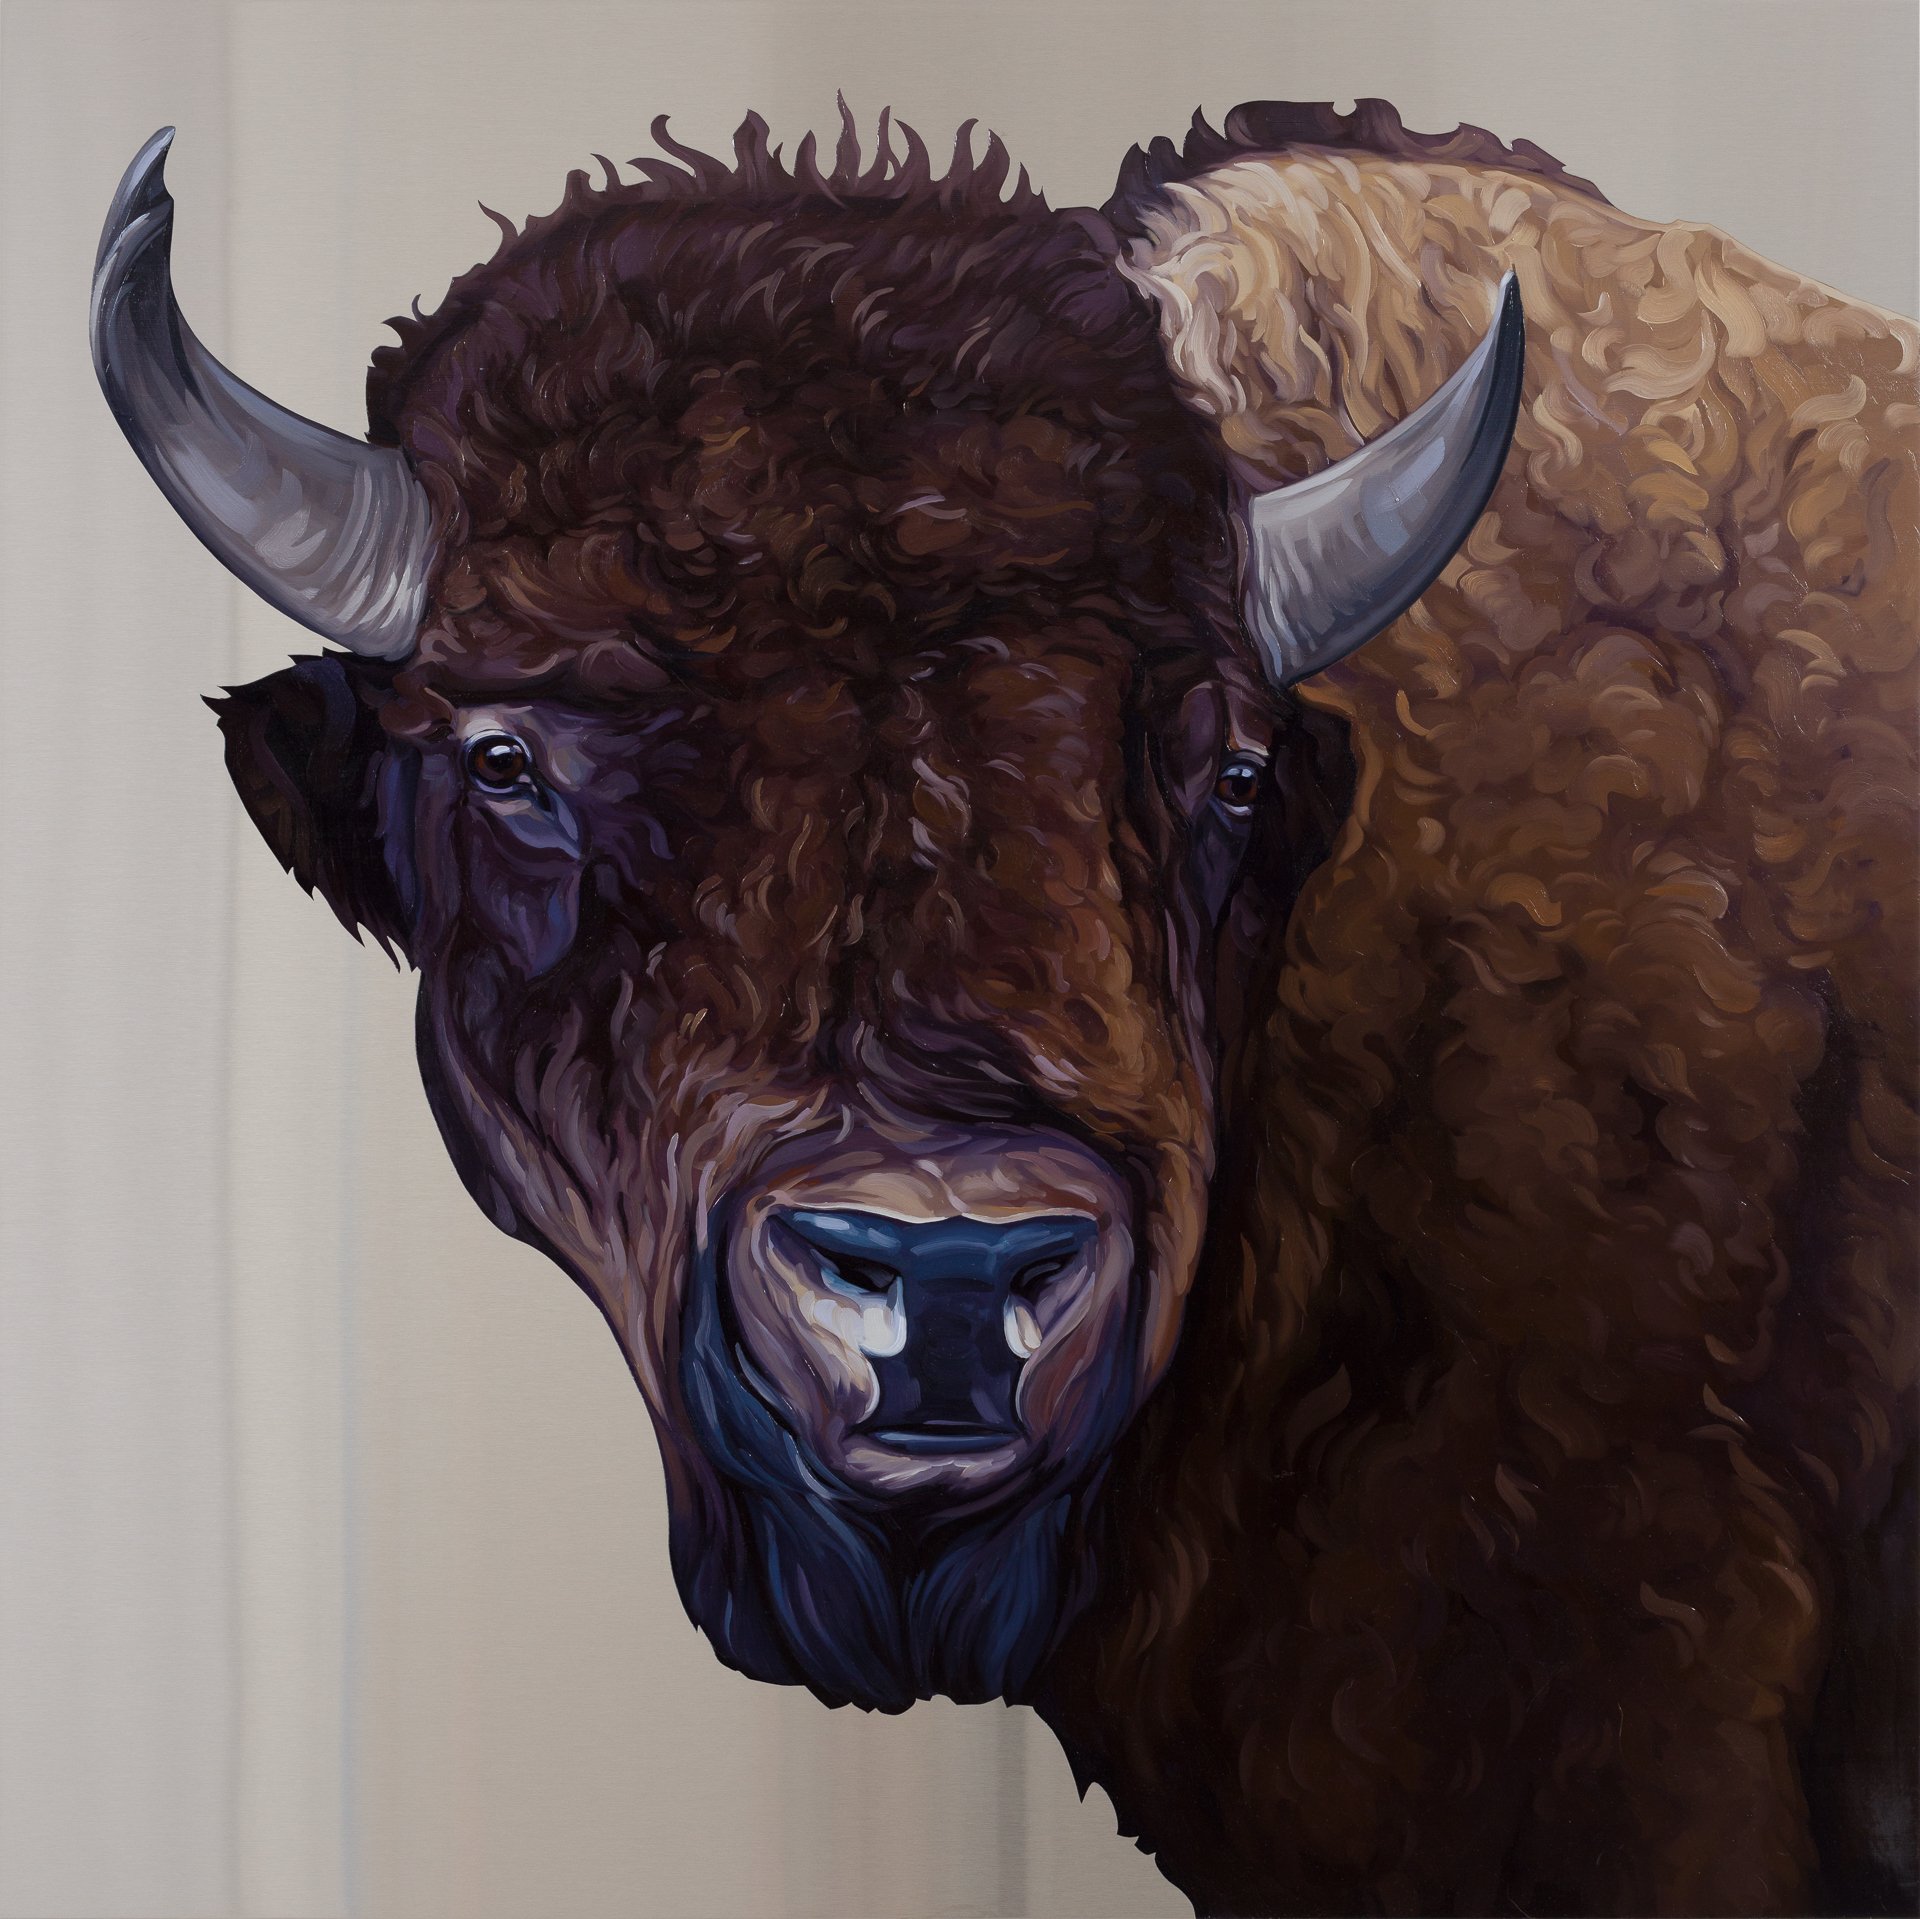  American Buffalo. Oil on stainless steel, 36in x 36in 